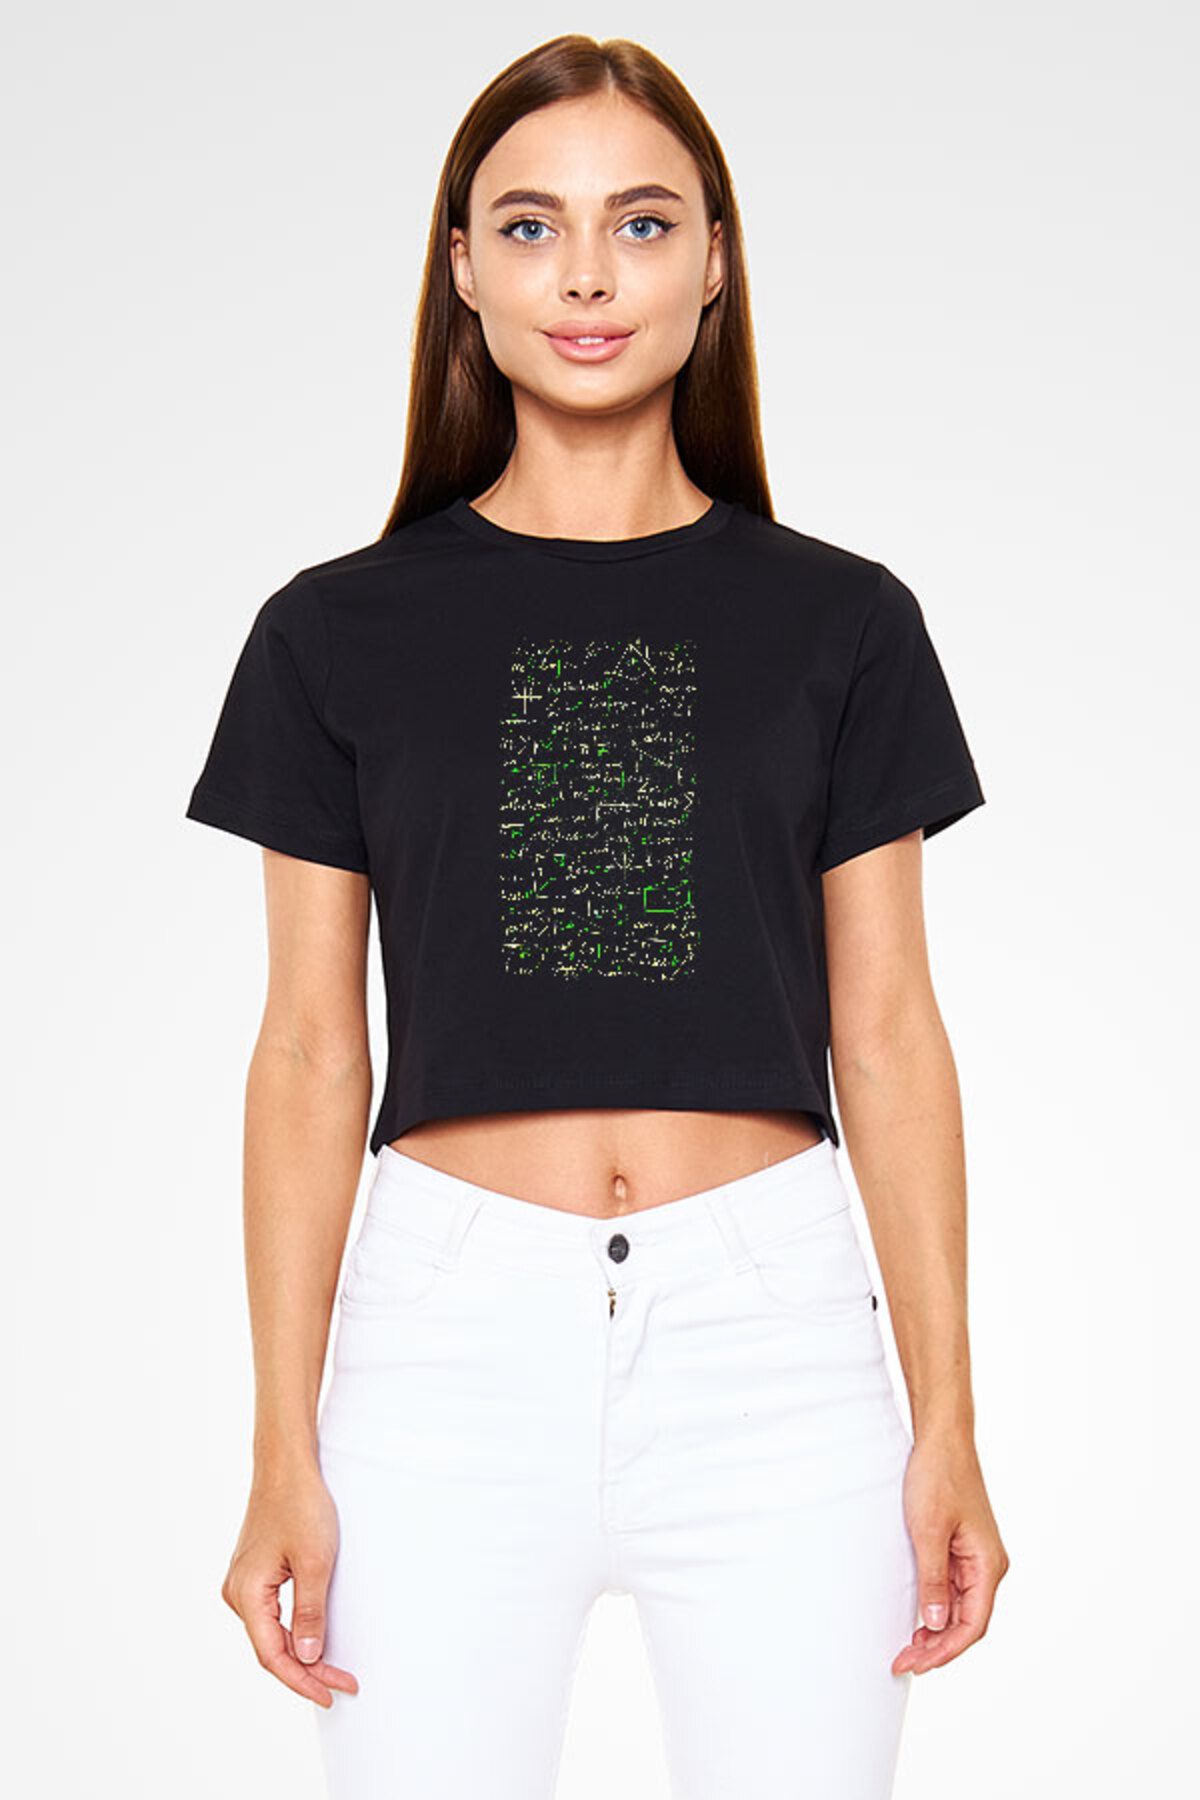 Darkhane Matematik Fizik Formülleri  Siyah Unisex Crop Top Tişört T-Shirt